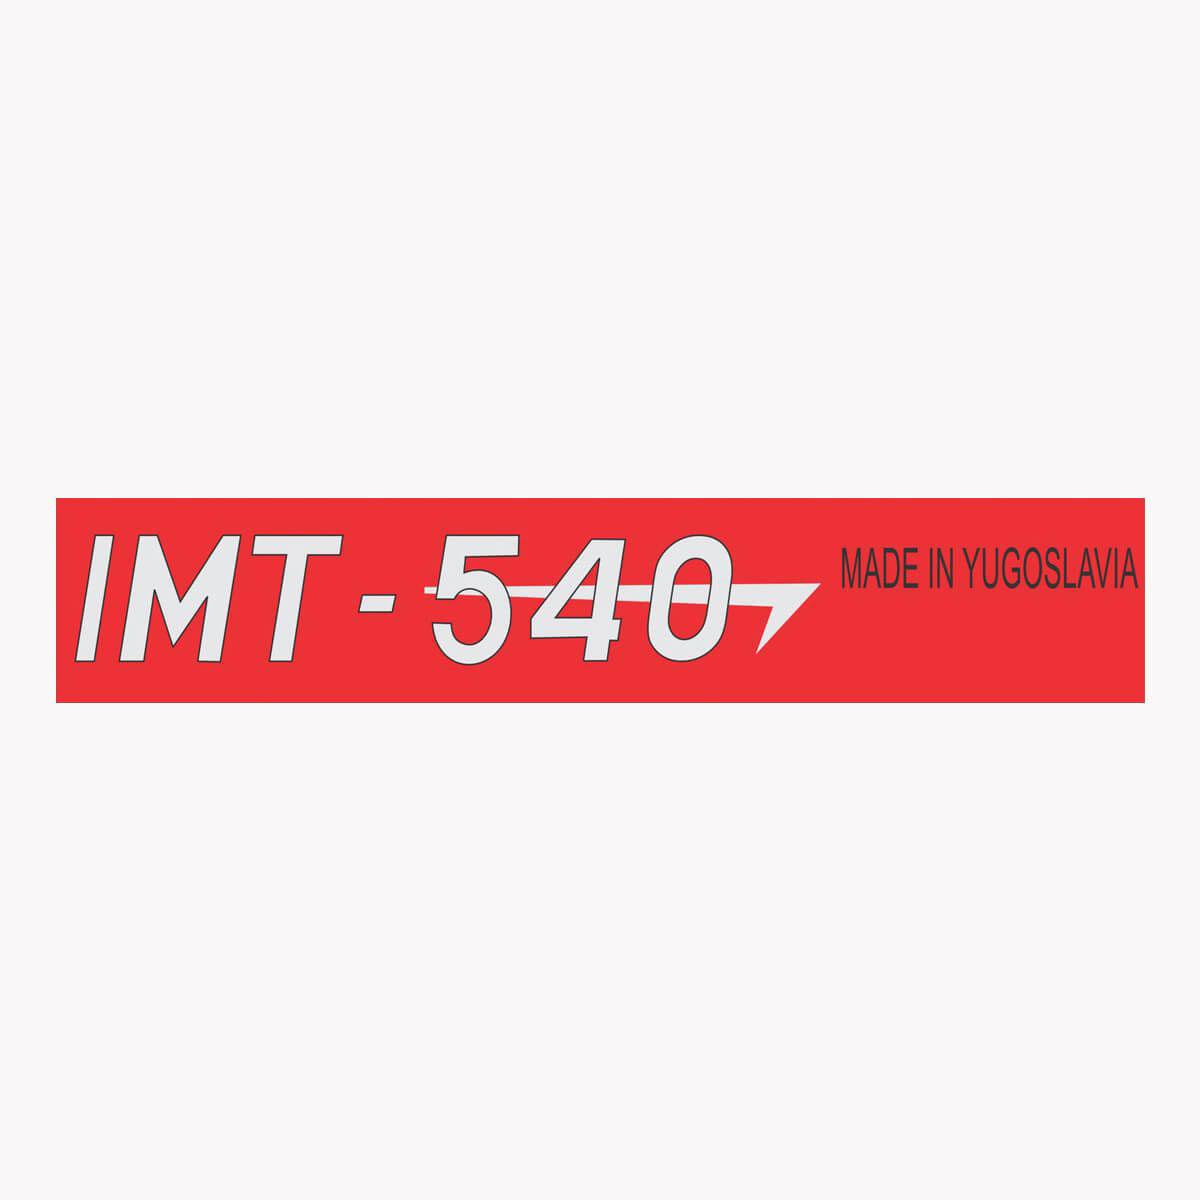 CAR 888 ACCESSORIES Nalepnica "Imt 540" velika crvena